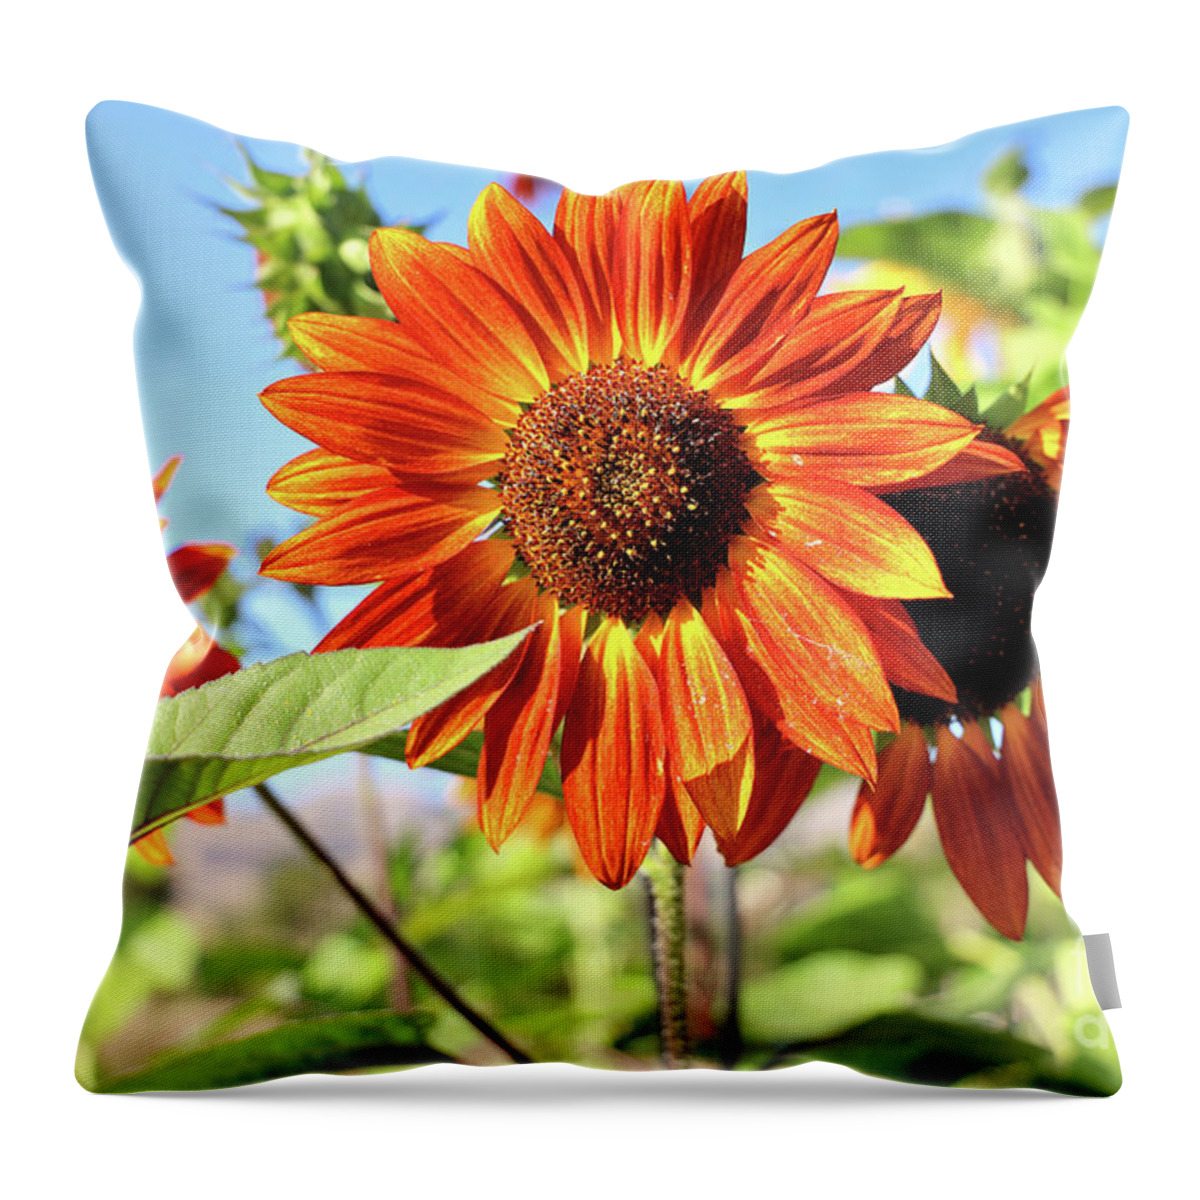 Sunflower Throw Pillow featuring the photograph Orange Sunflowers by Vivian Krug Cotton